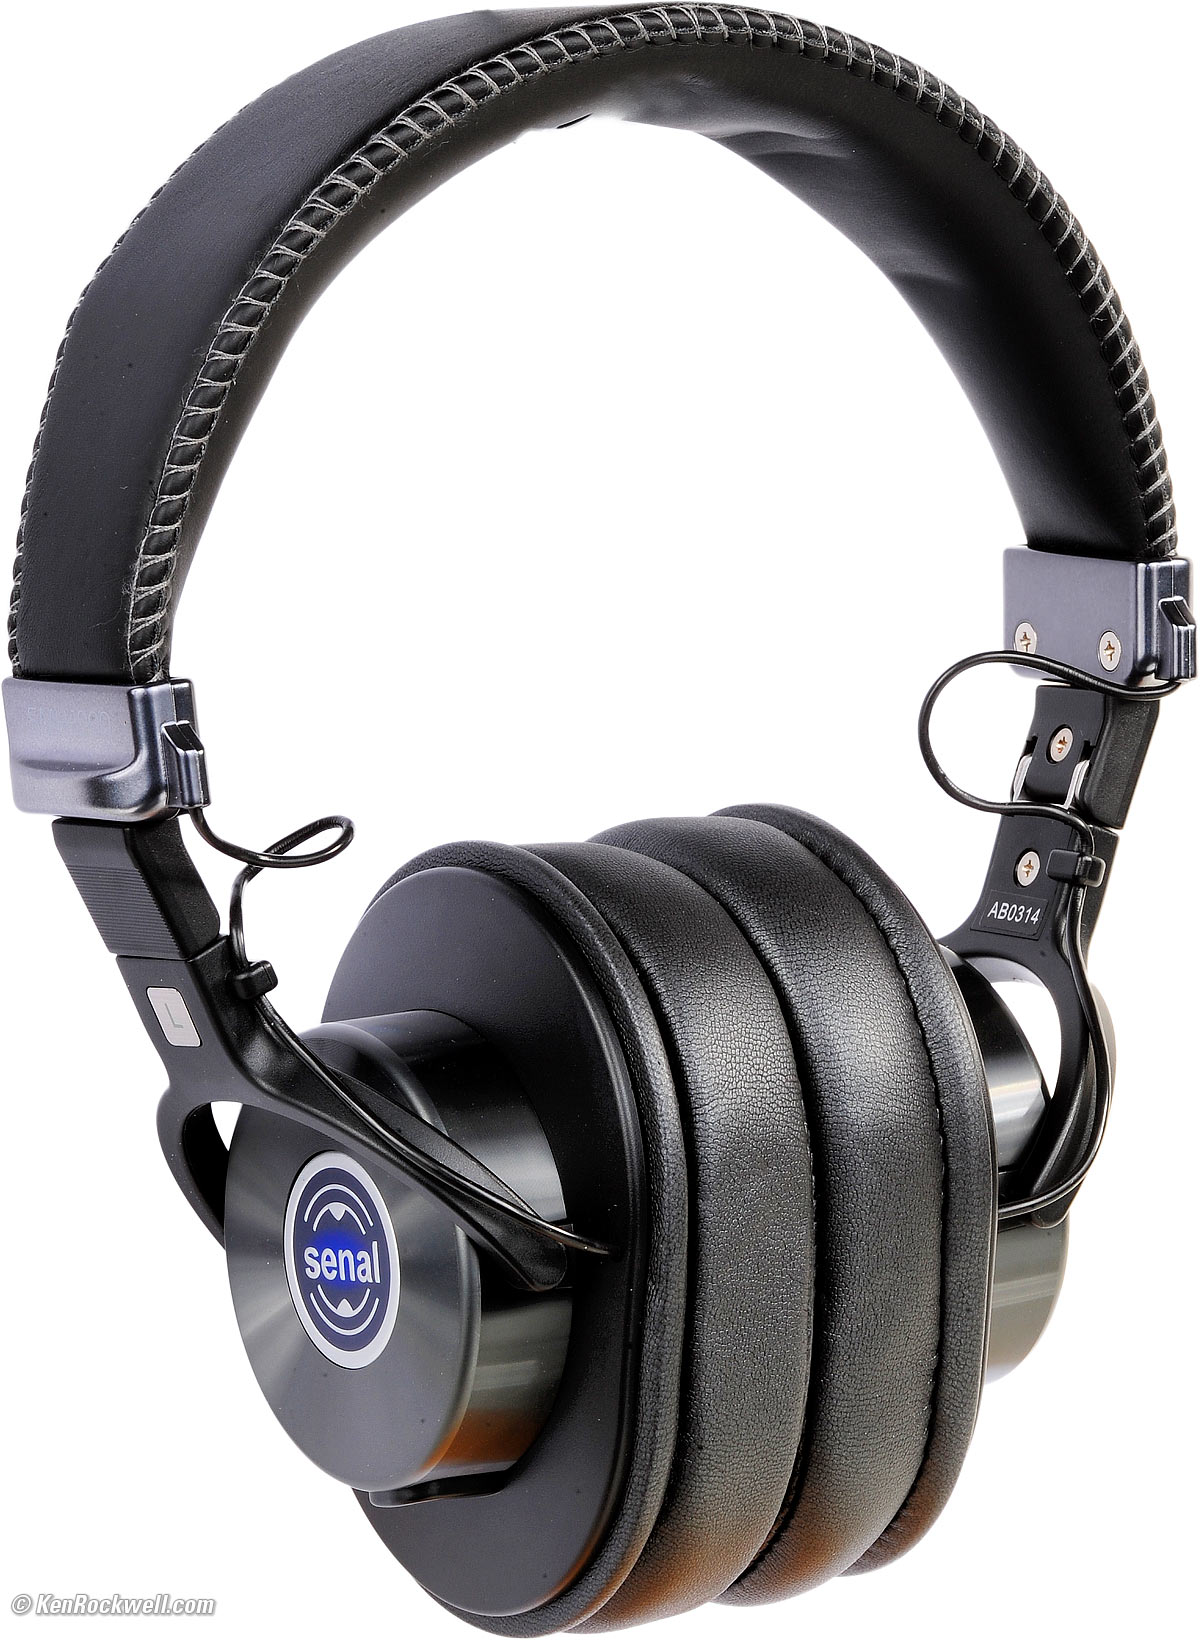 Senal SMH-1200 Headphones Review